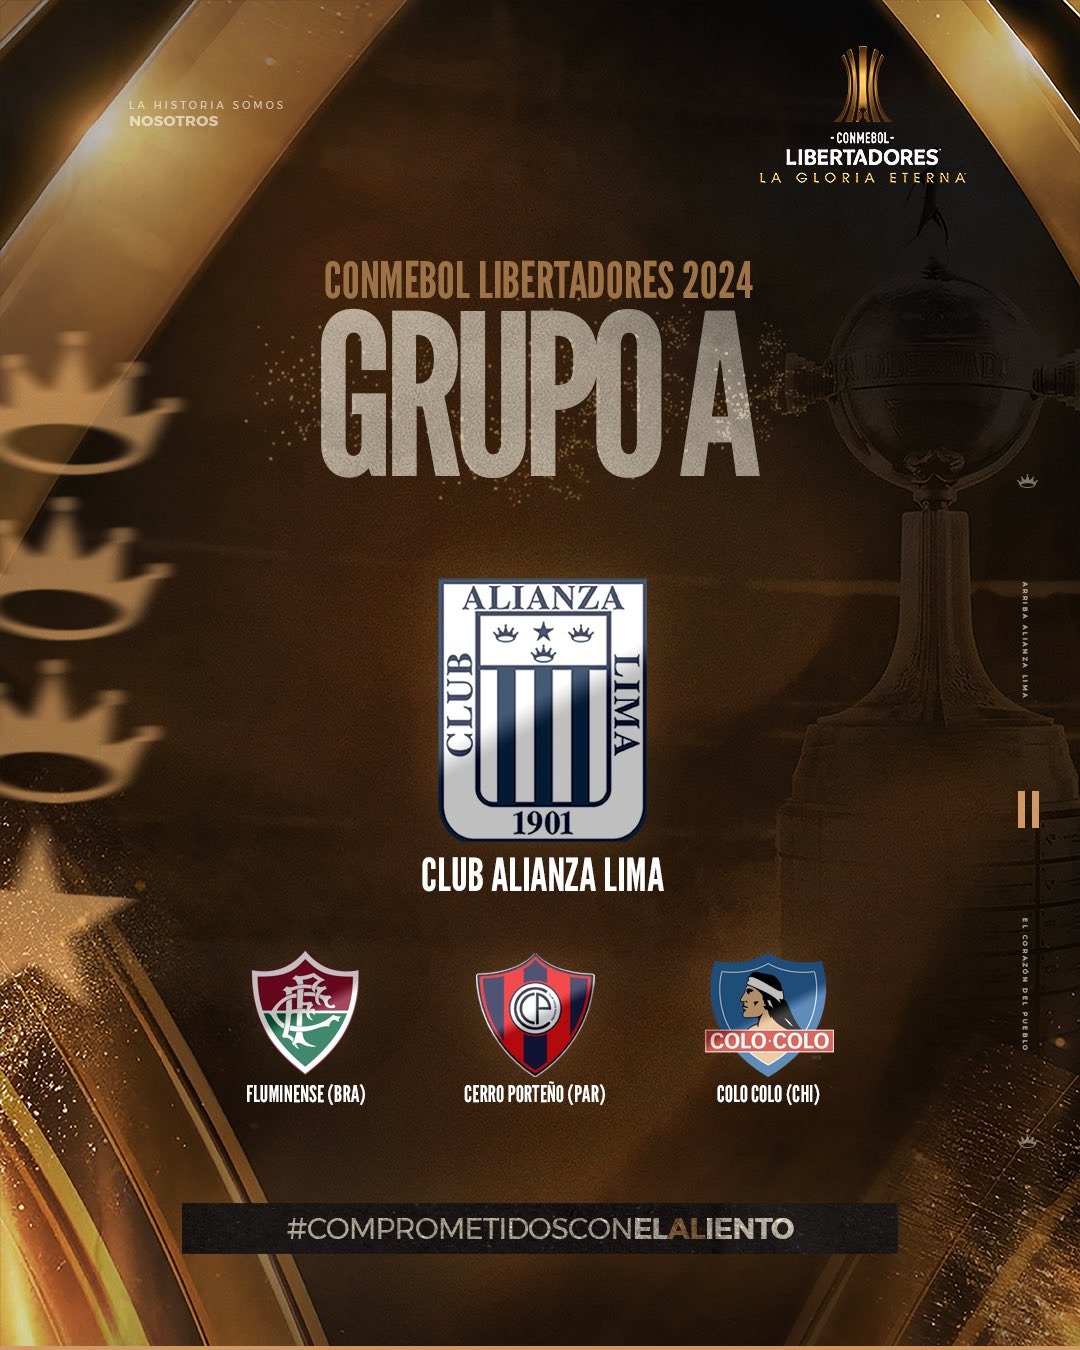 Grupo A de Alianza Lima en la Copa Libertadores 2024. | Foto: Alianza Lima.